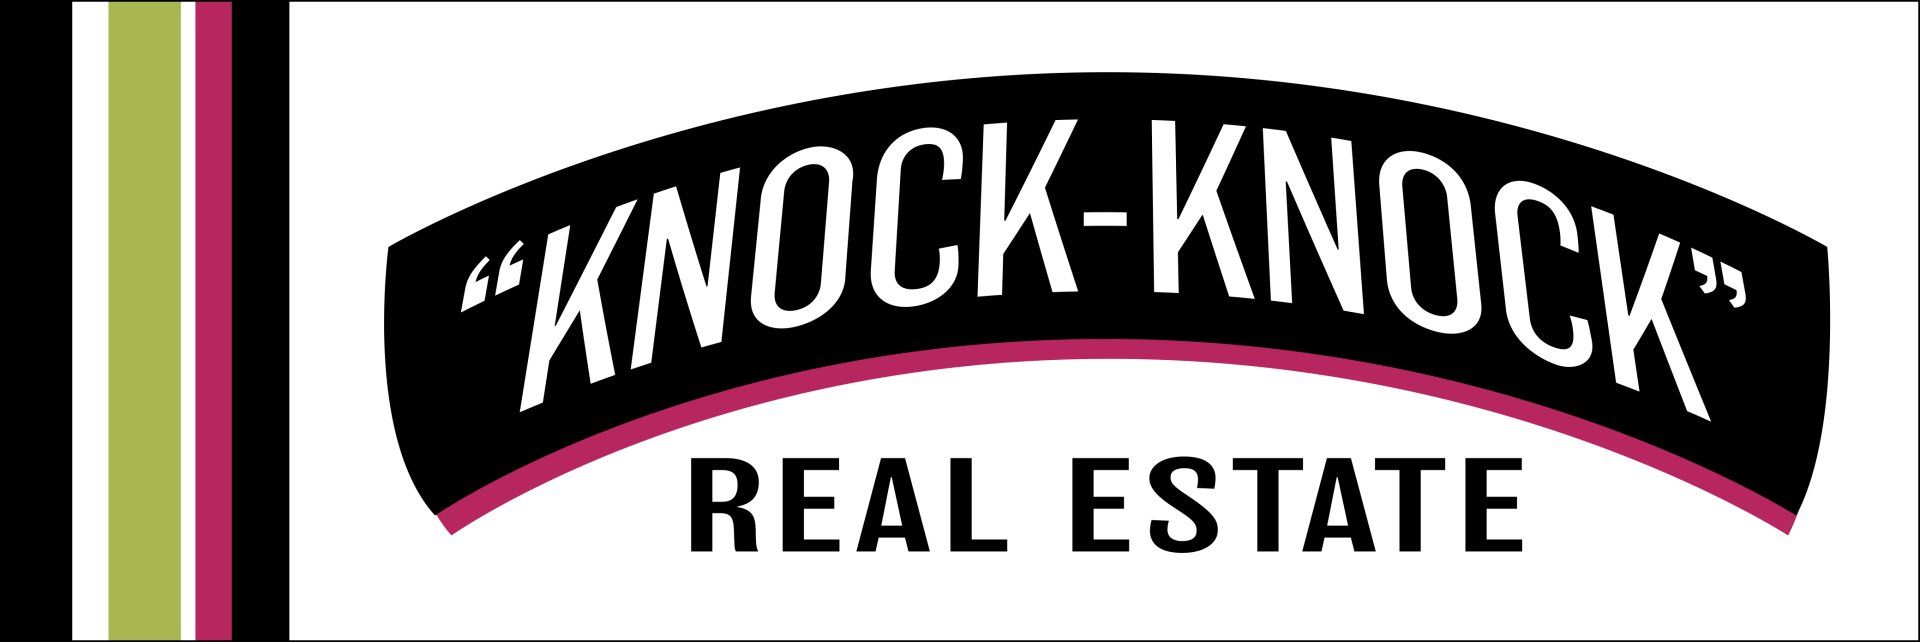 Knock Knock Real Estate Wollongong